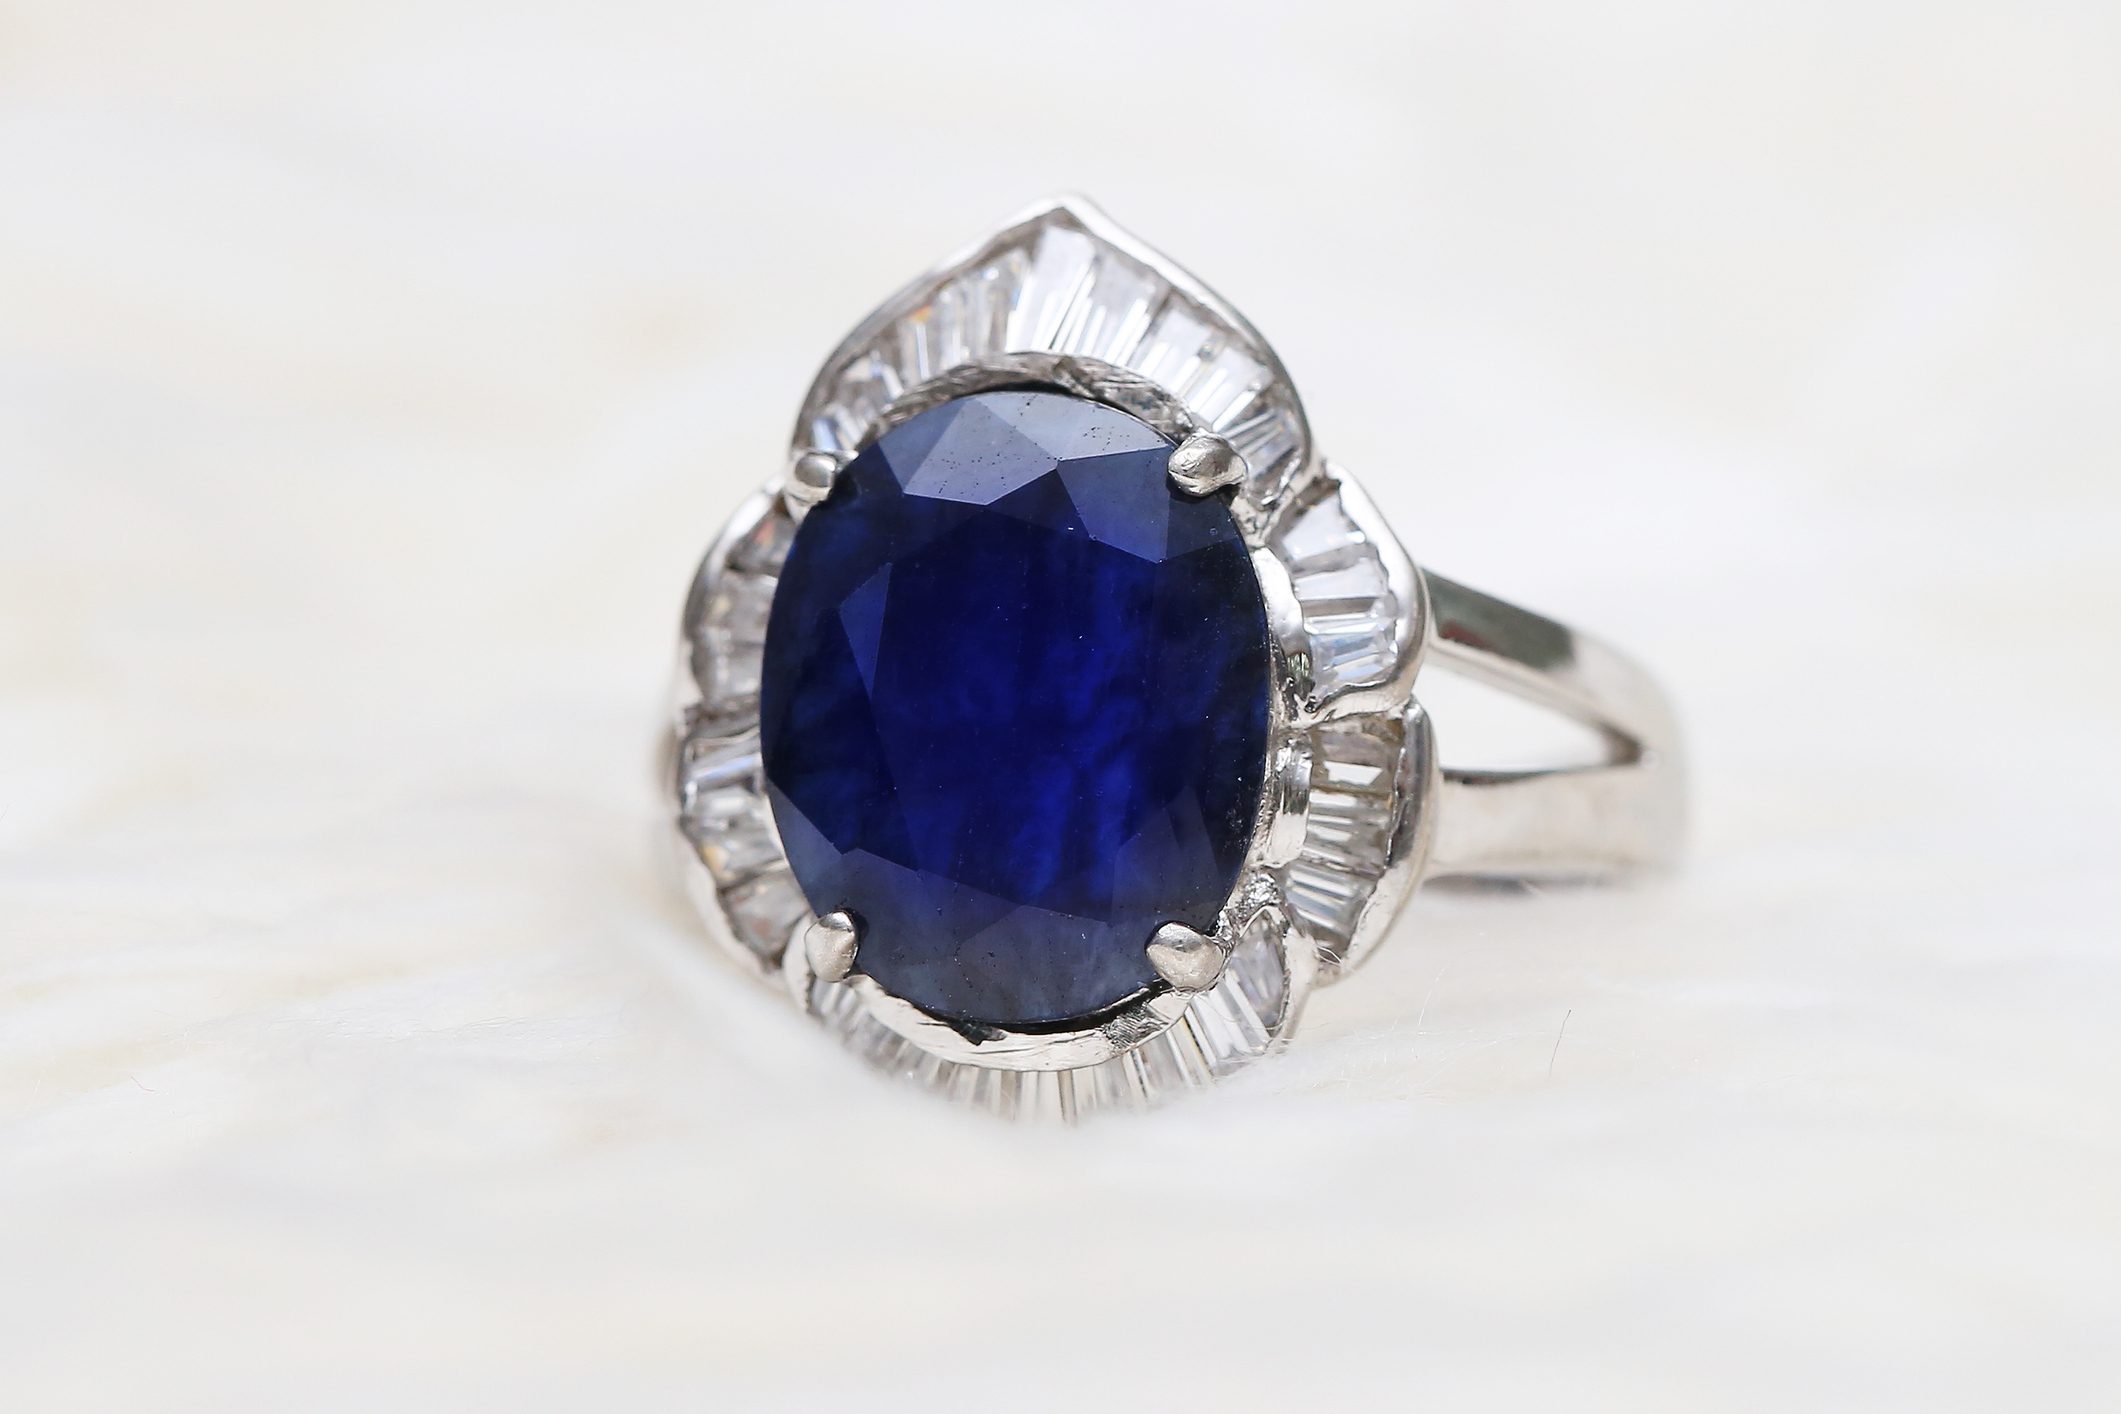 Blue gemstone on silver ring